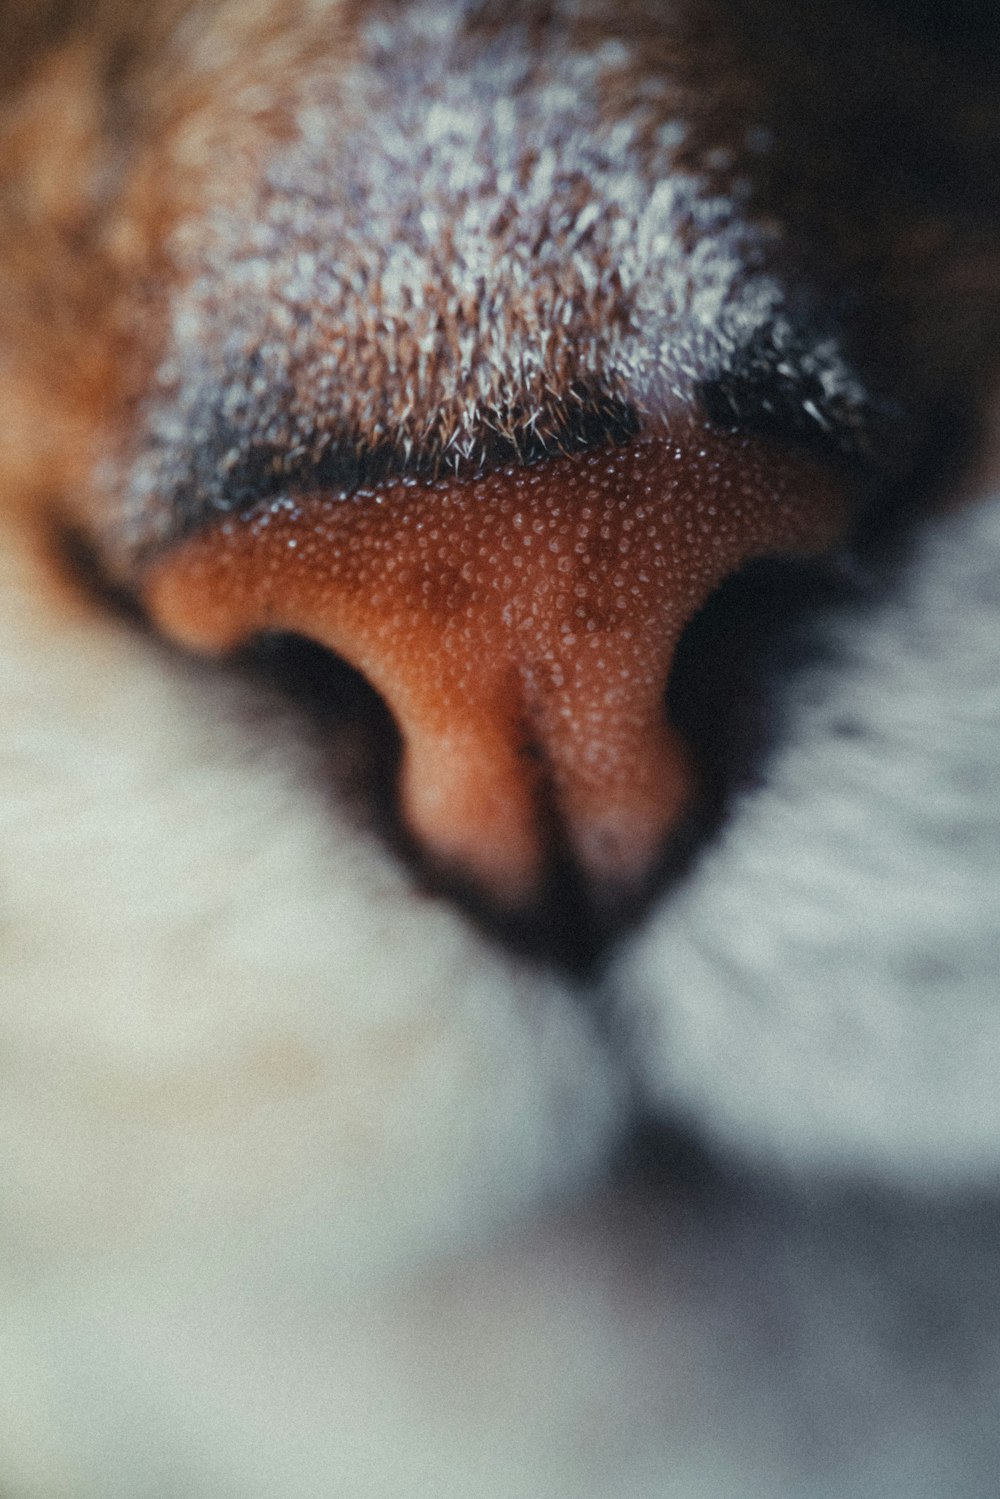 a close up of a cat's nose and nose